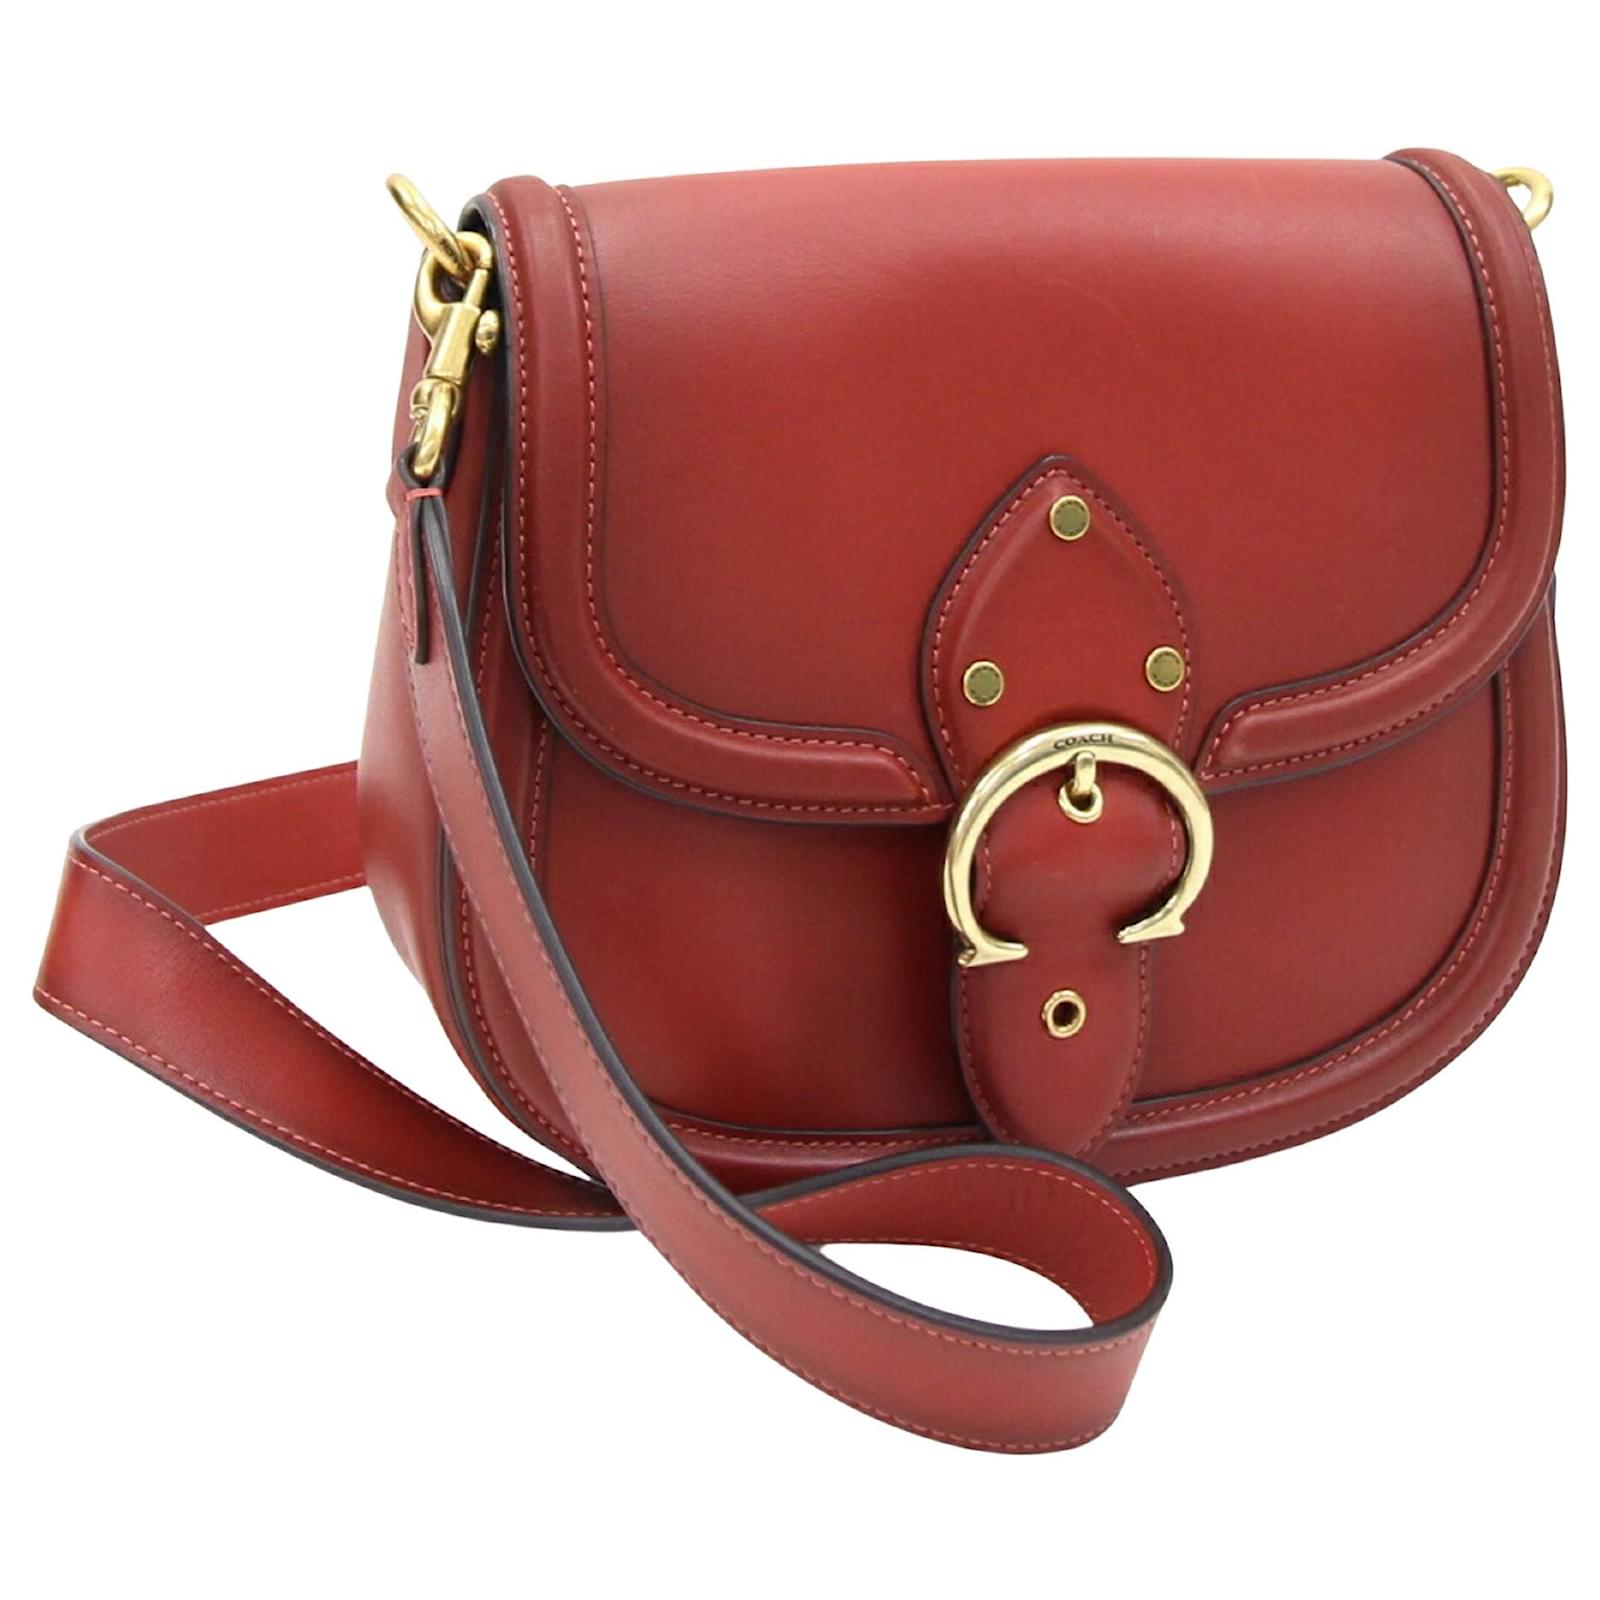 Mavin | Coach Vintage Legacy Red Leather Hobo Shoulder Bag Purse 9566 Medium